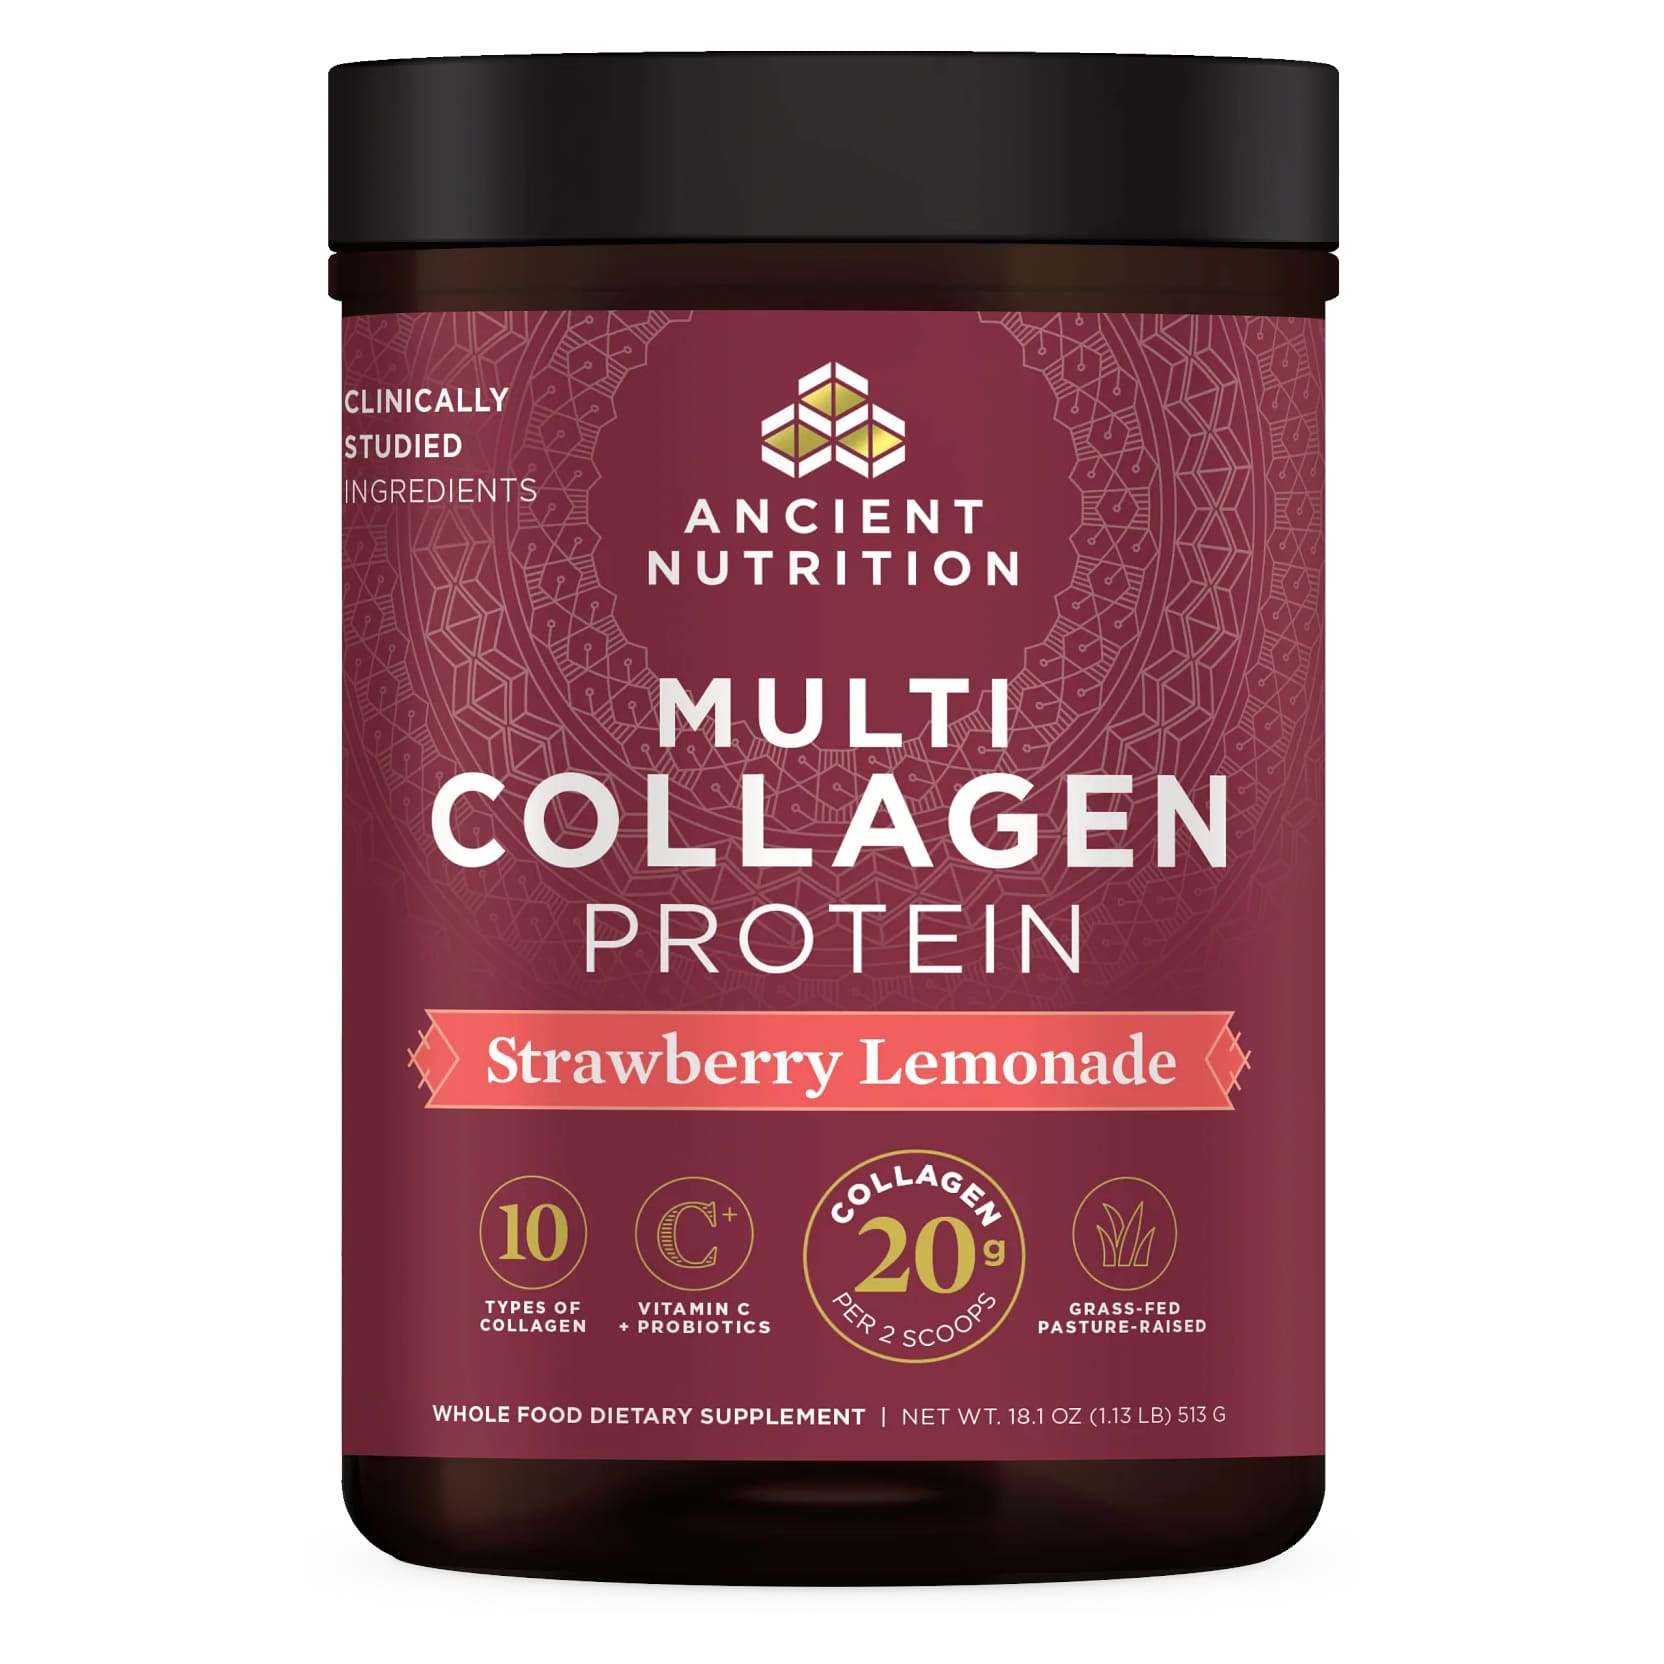 Коллаген Ancient Nutrition Multi Protein 10 Types Vitamin C + Probiotics Strawberry Lemonade, 513 г биологически активная добавка beguana коллаген 180 гр